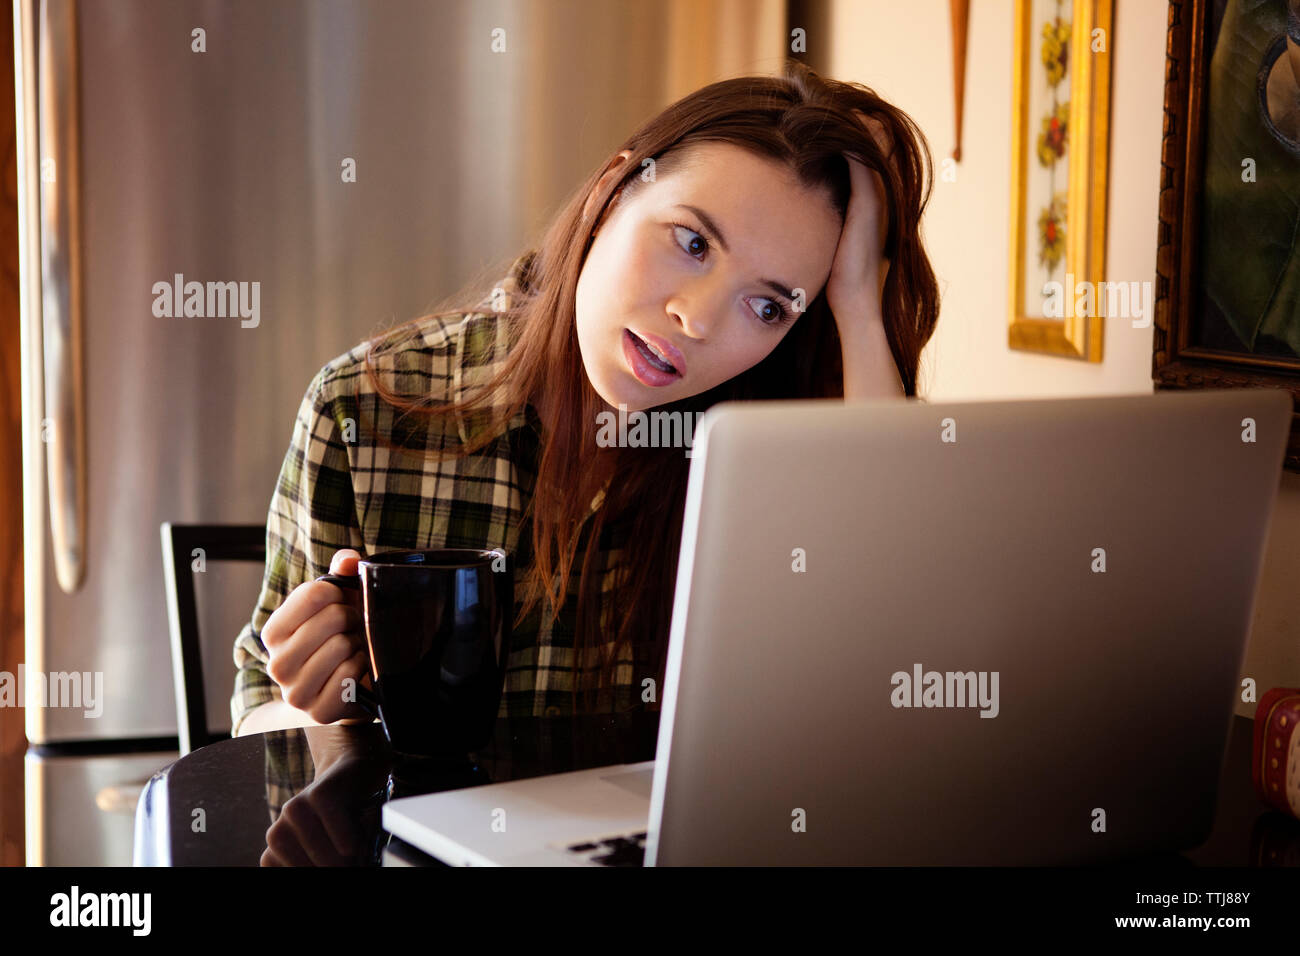 Woman coffee mug looking at laptop computer while sitting at home Stock Photo